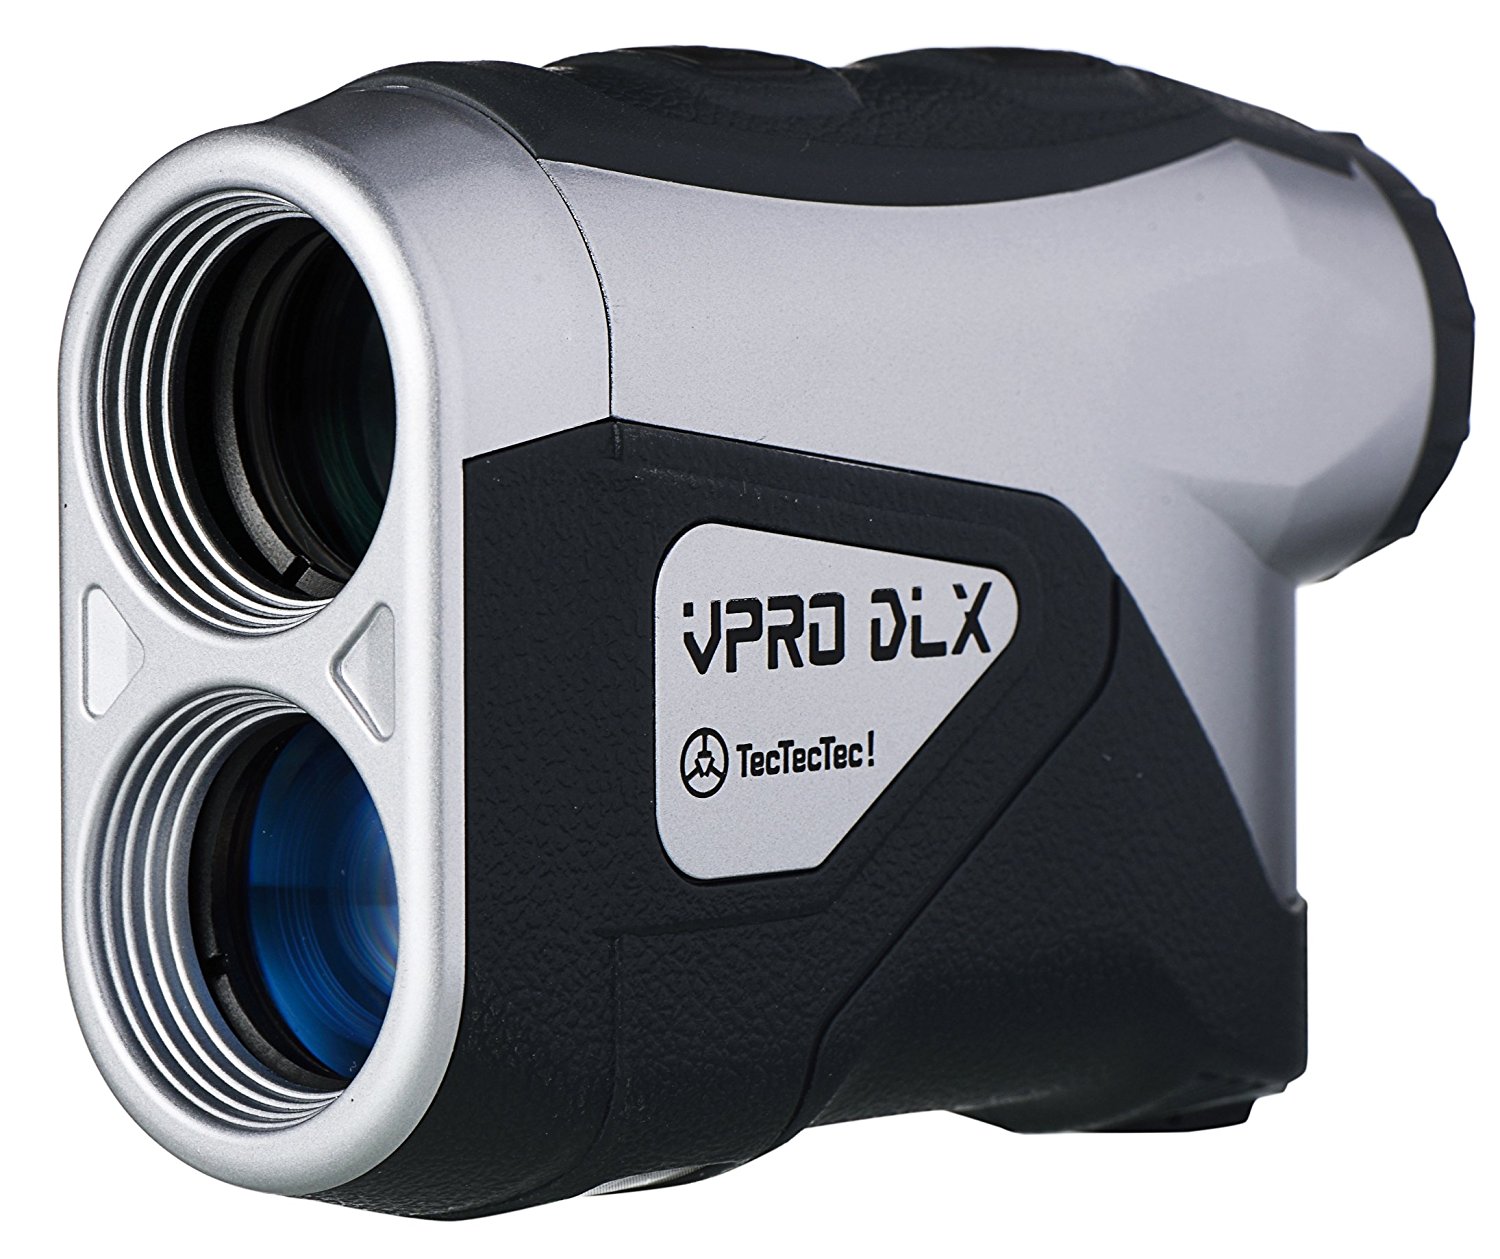 tectectec vprodlx golf rangefinder waterproof laser range finder